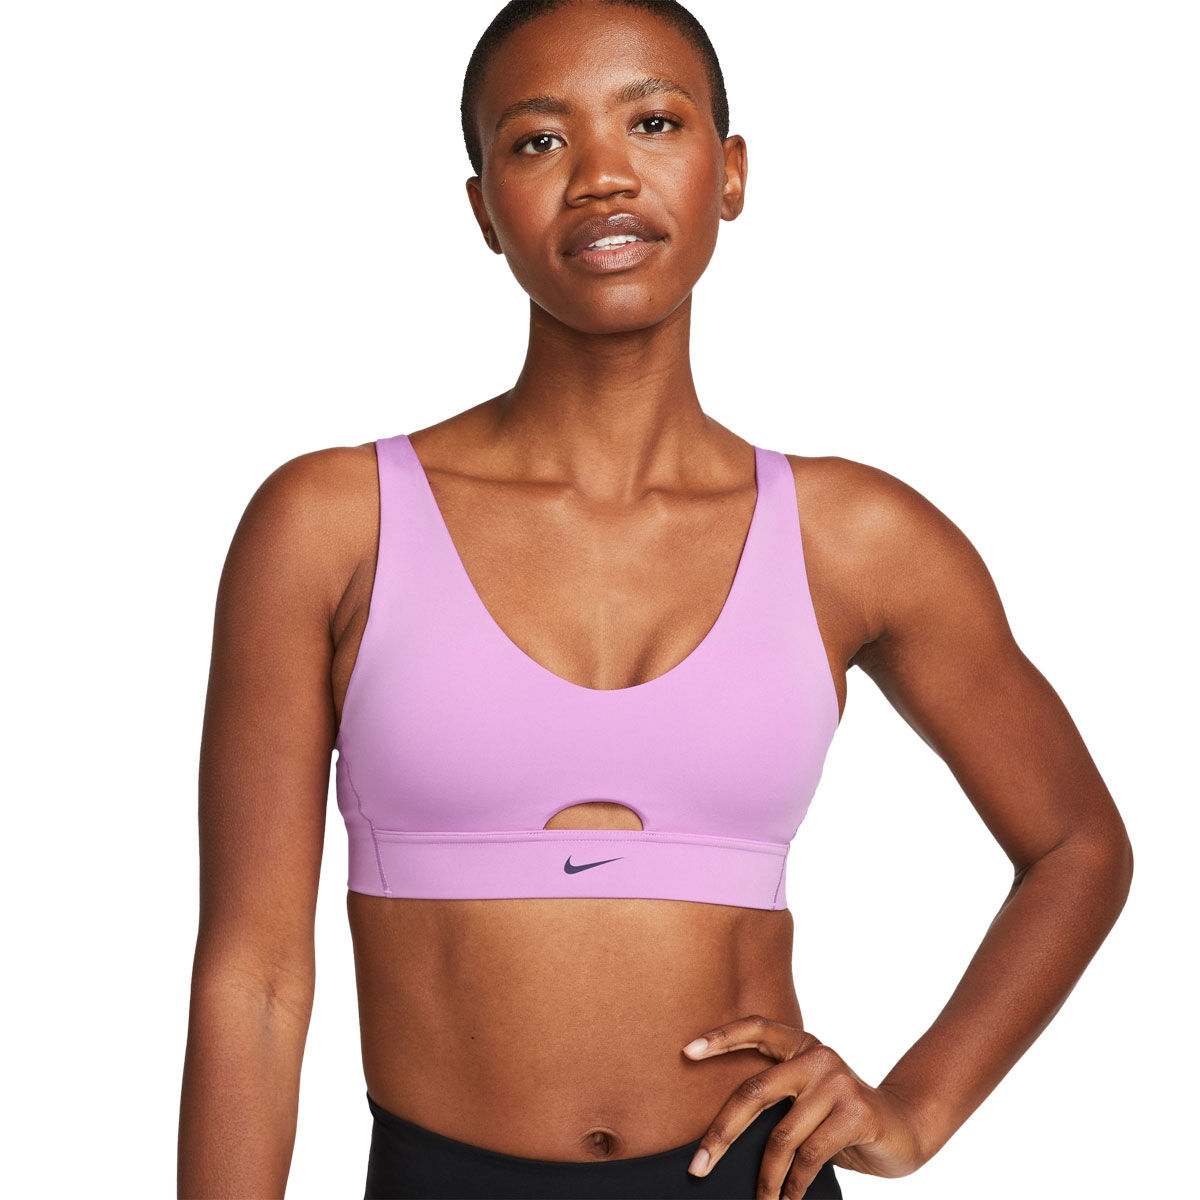 Nike Women's Indy Plus Size Sports Bra Pink Size 2X (20-22)